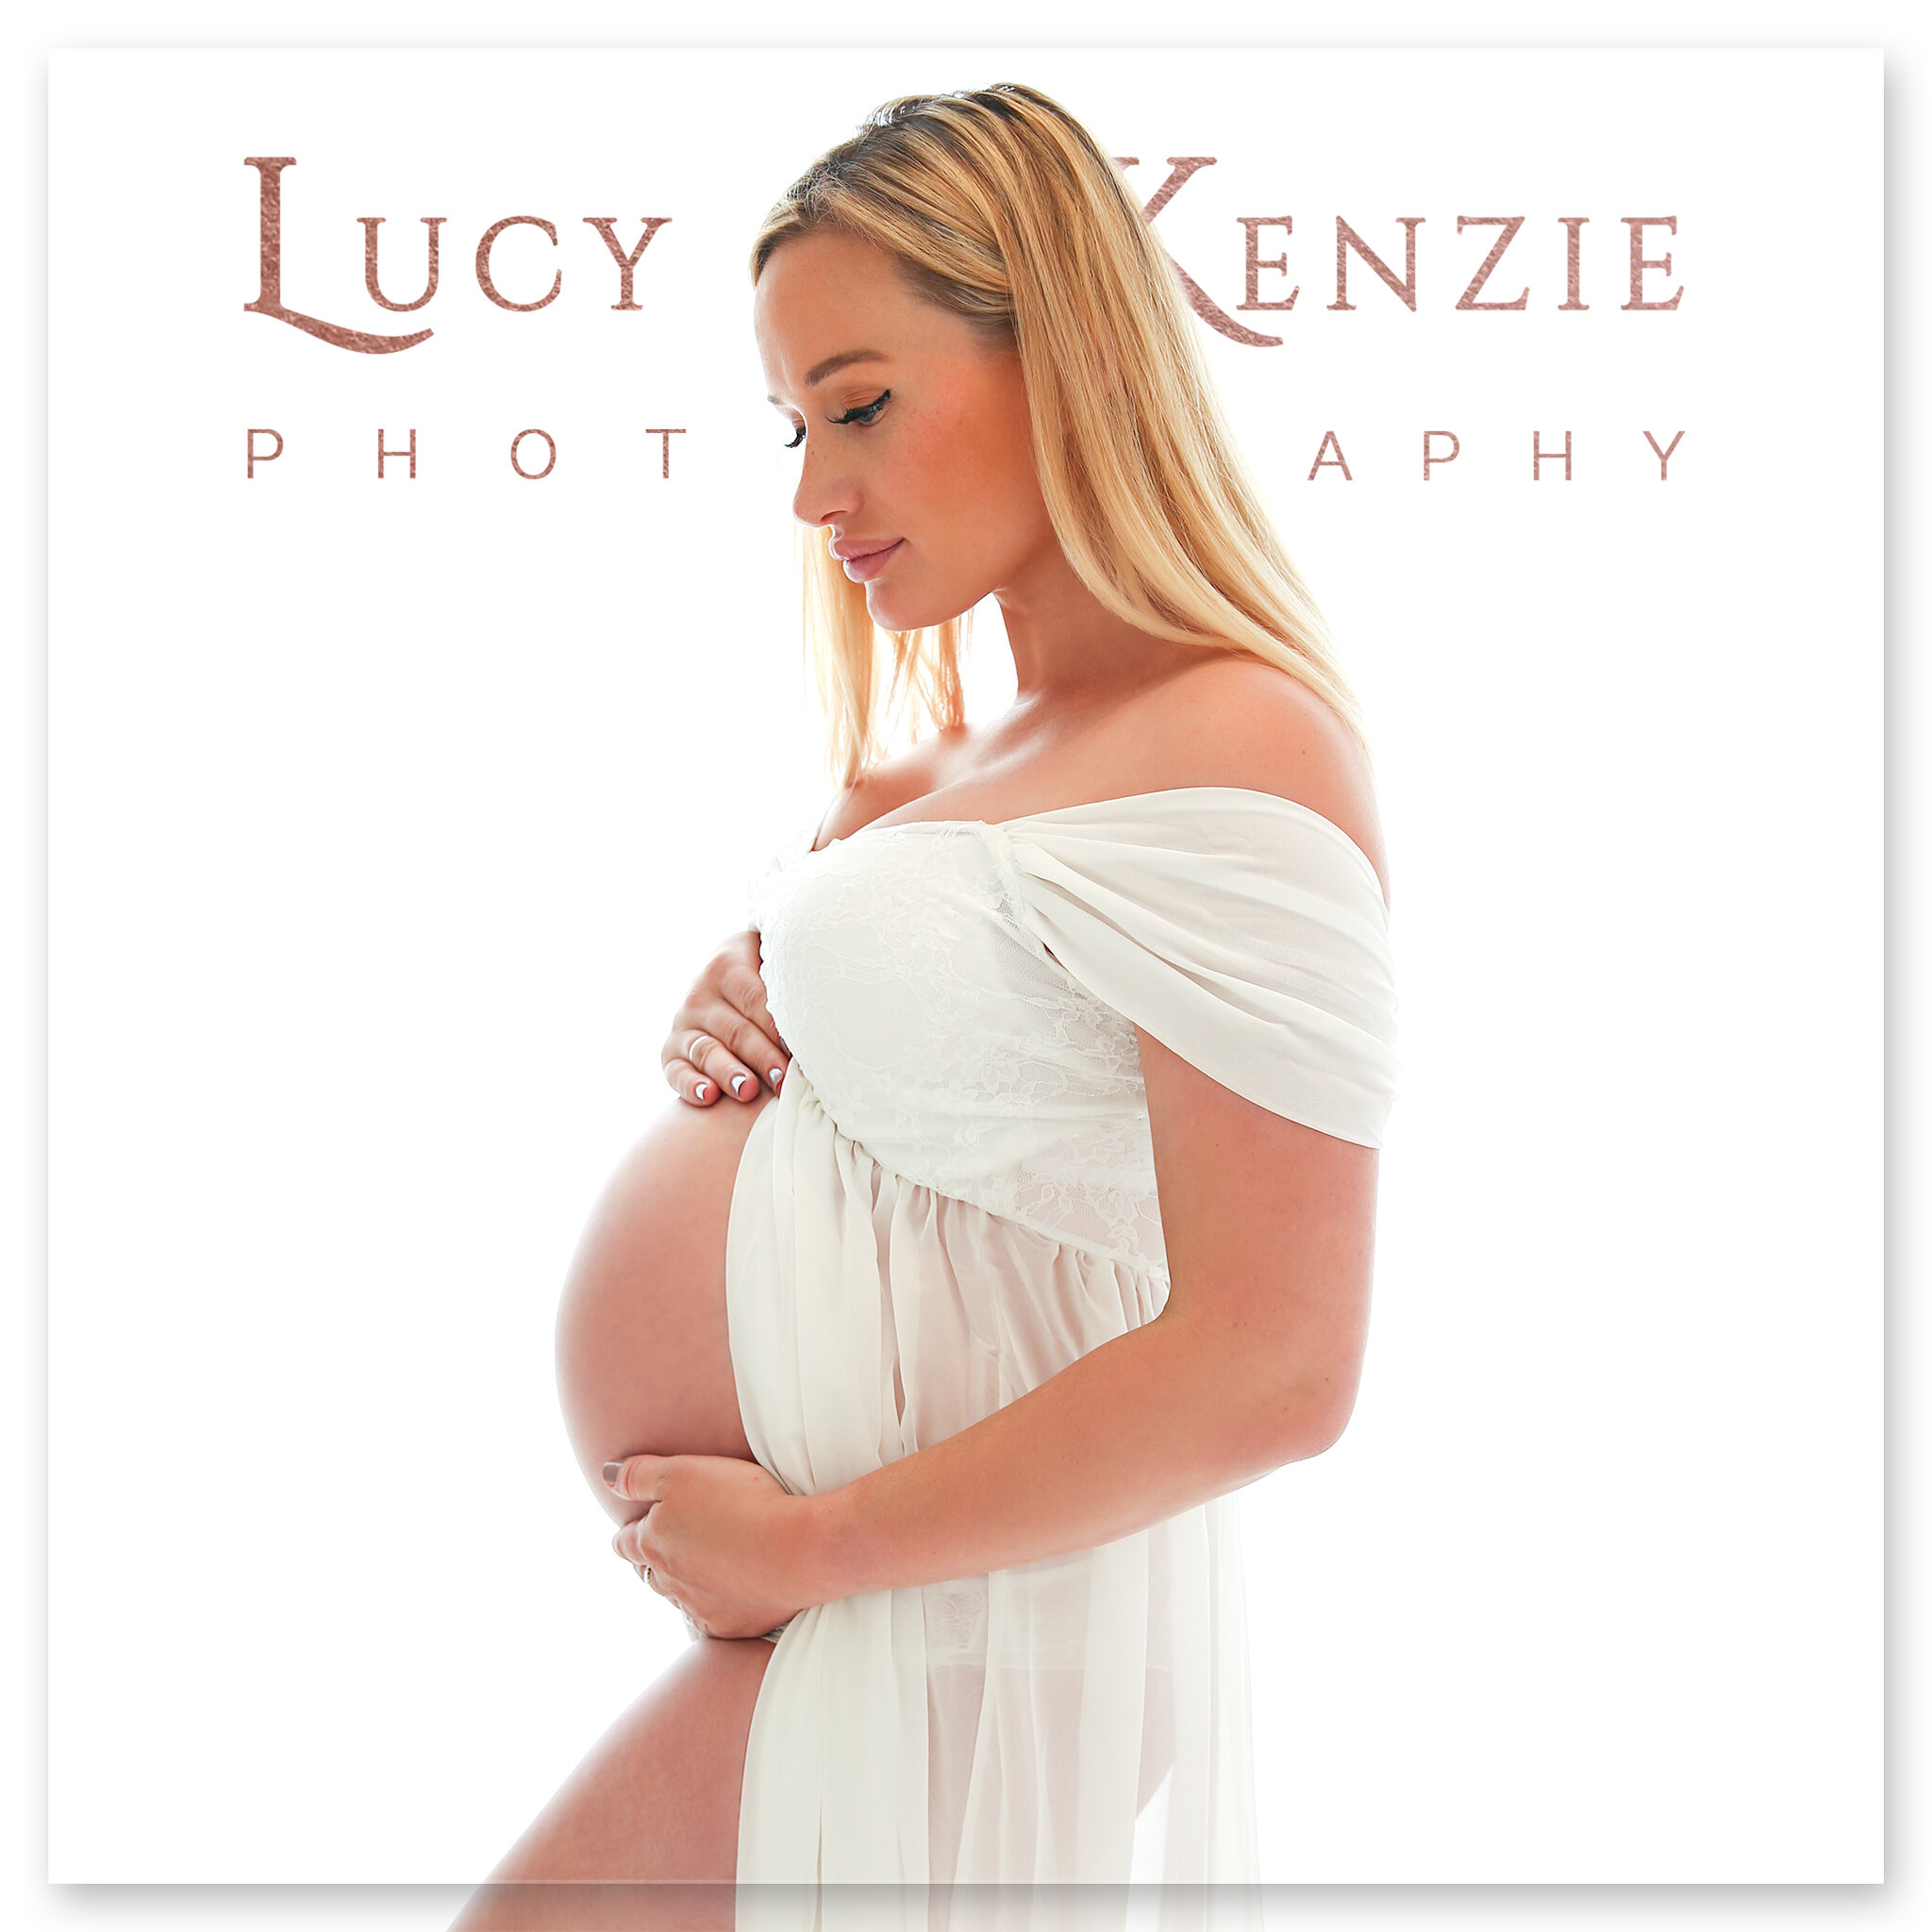 Maternity pregnancy baby bump photography